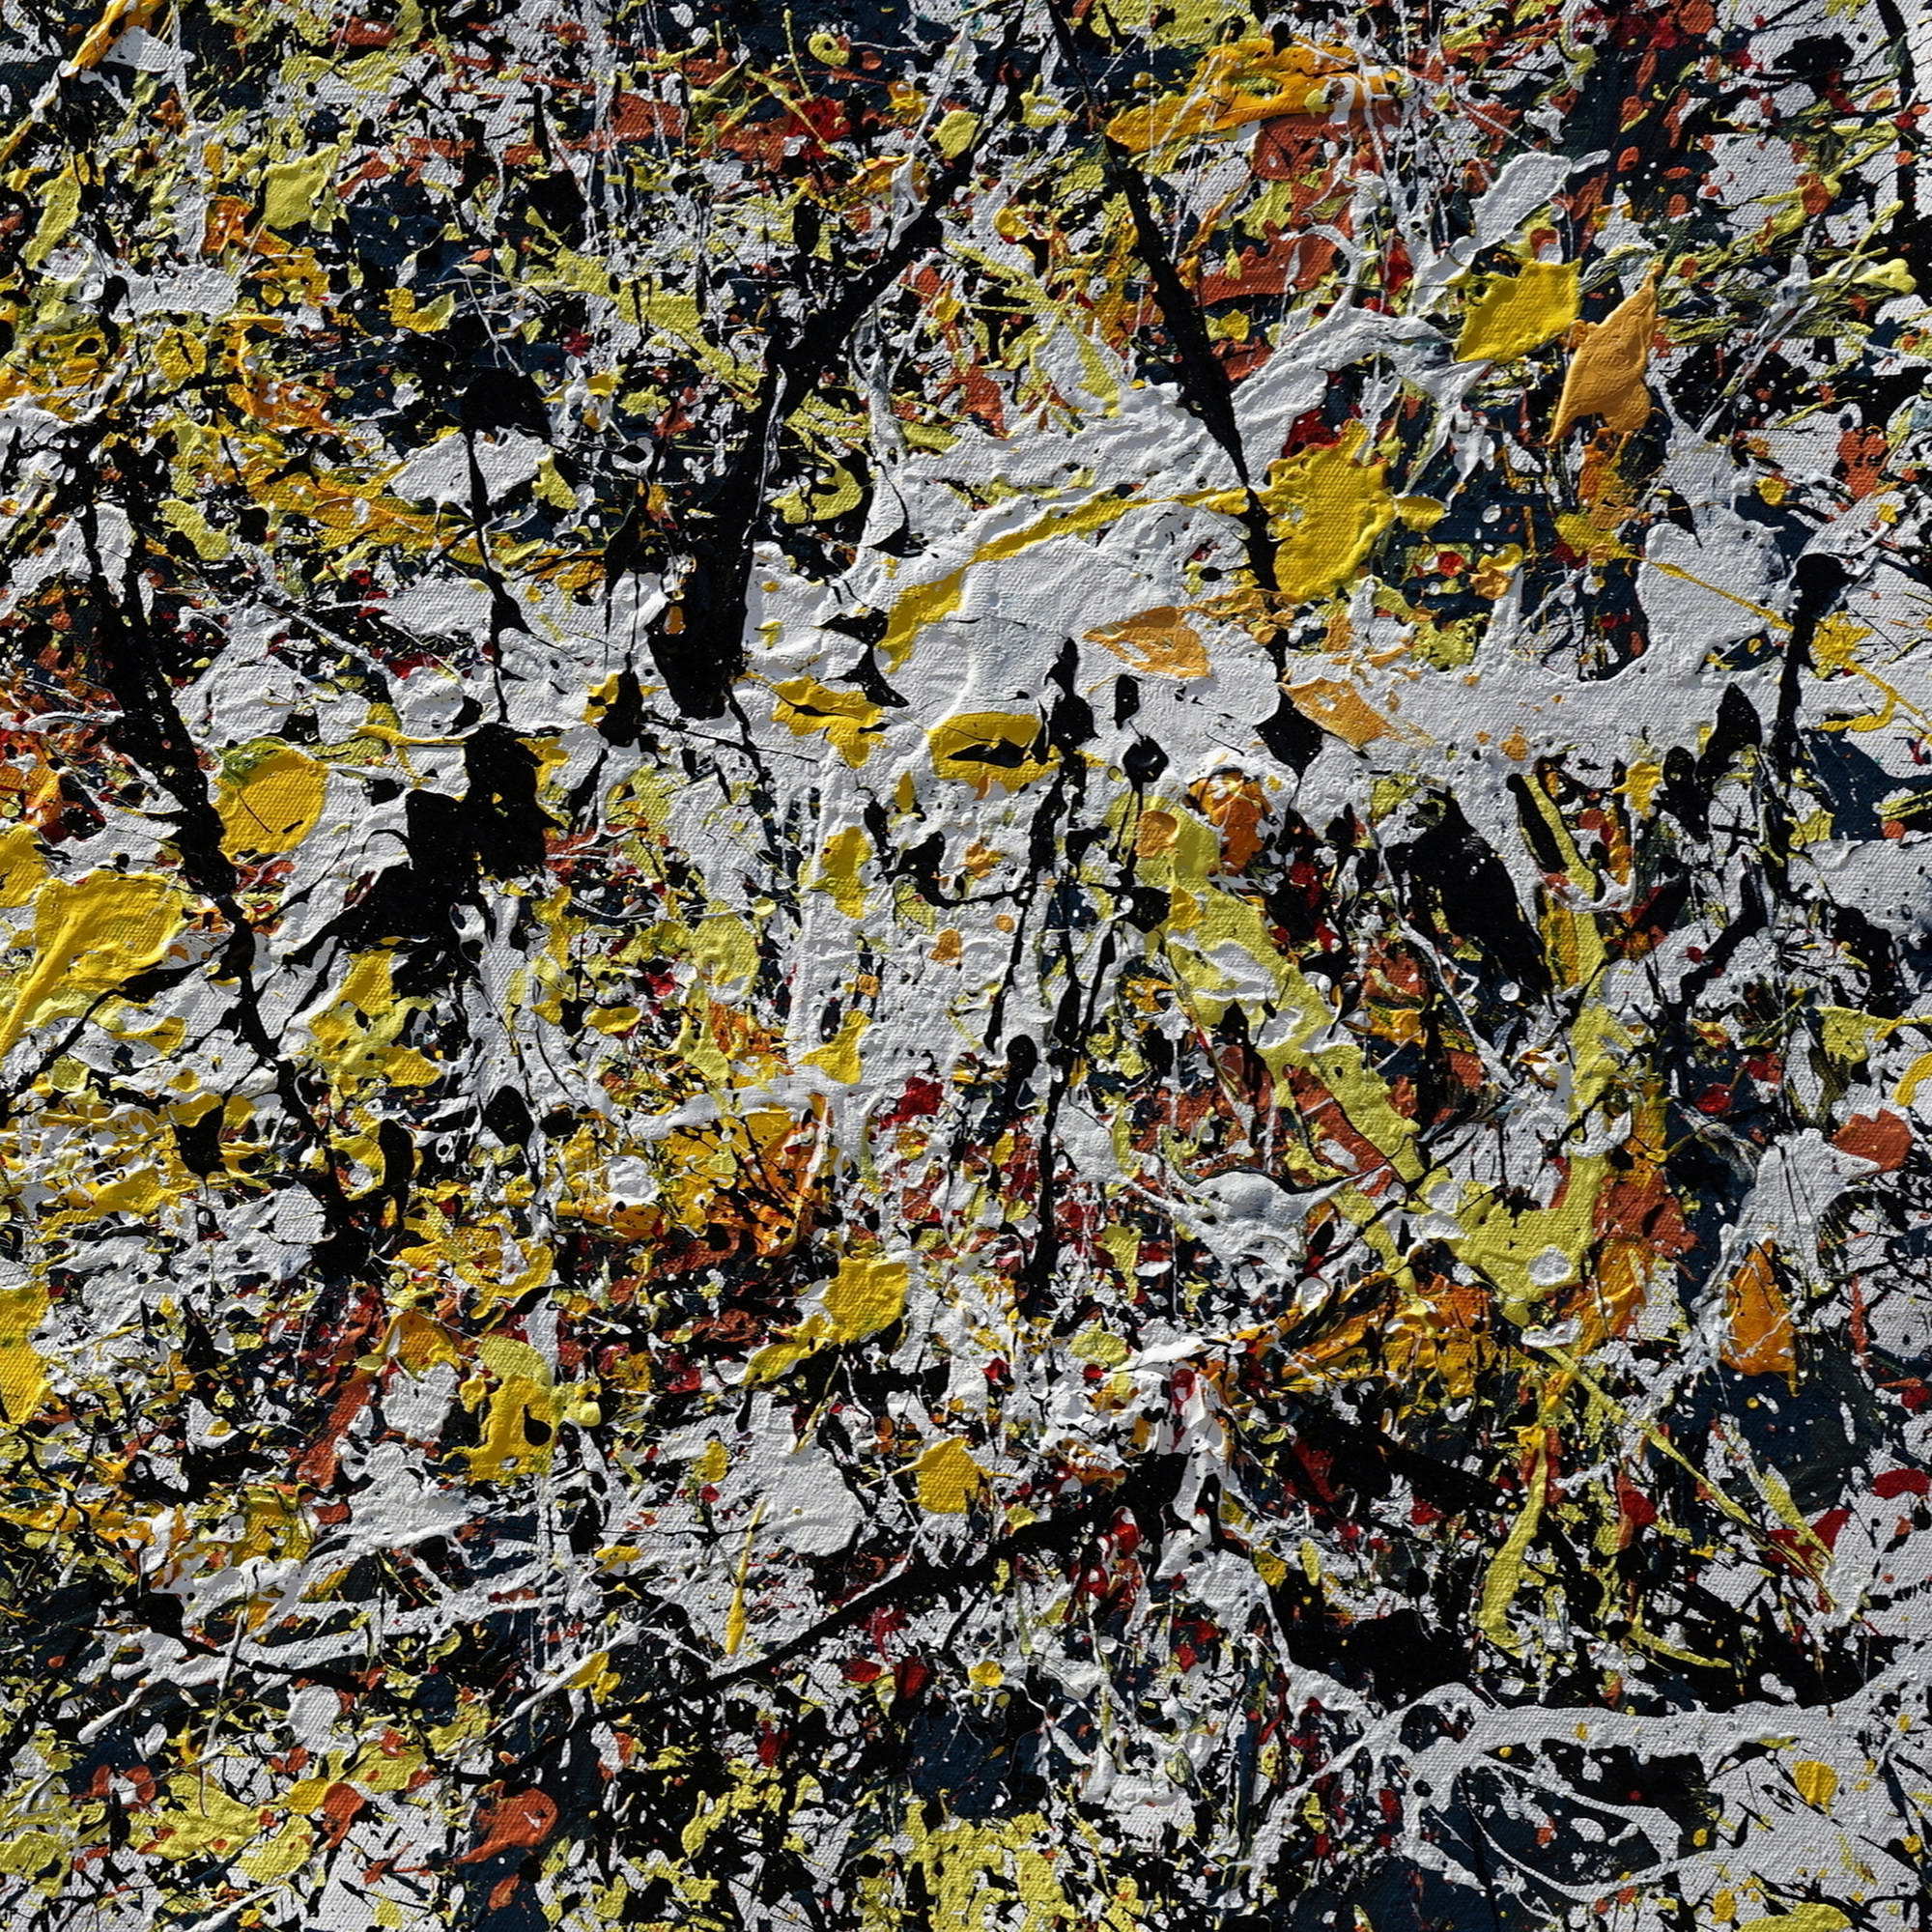 Dipinto a mano Astratto Giallo e Nero stile Pollock 75x150cm